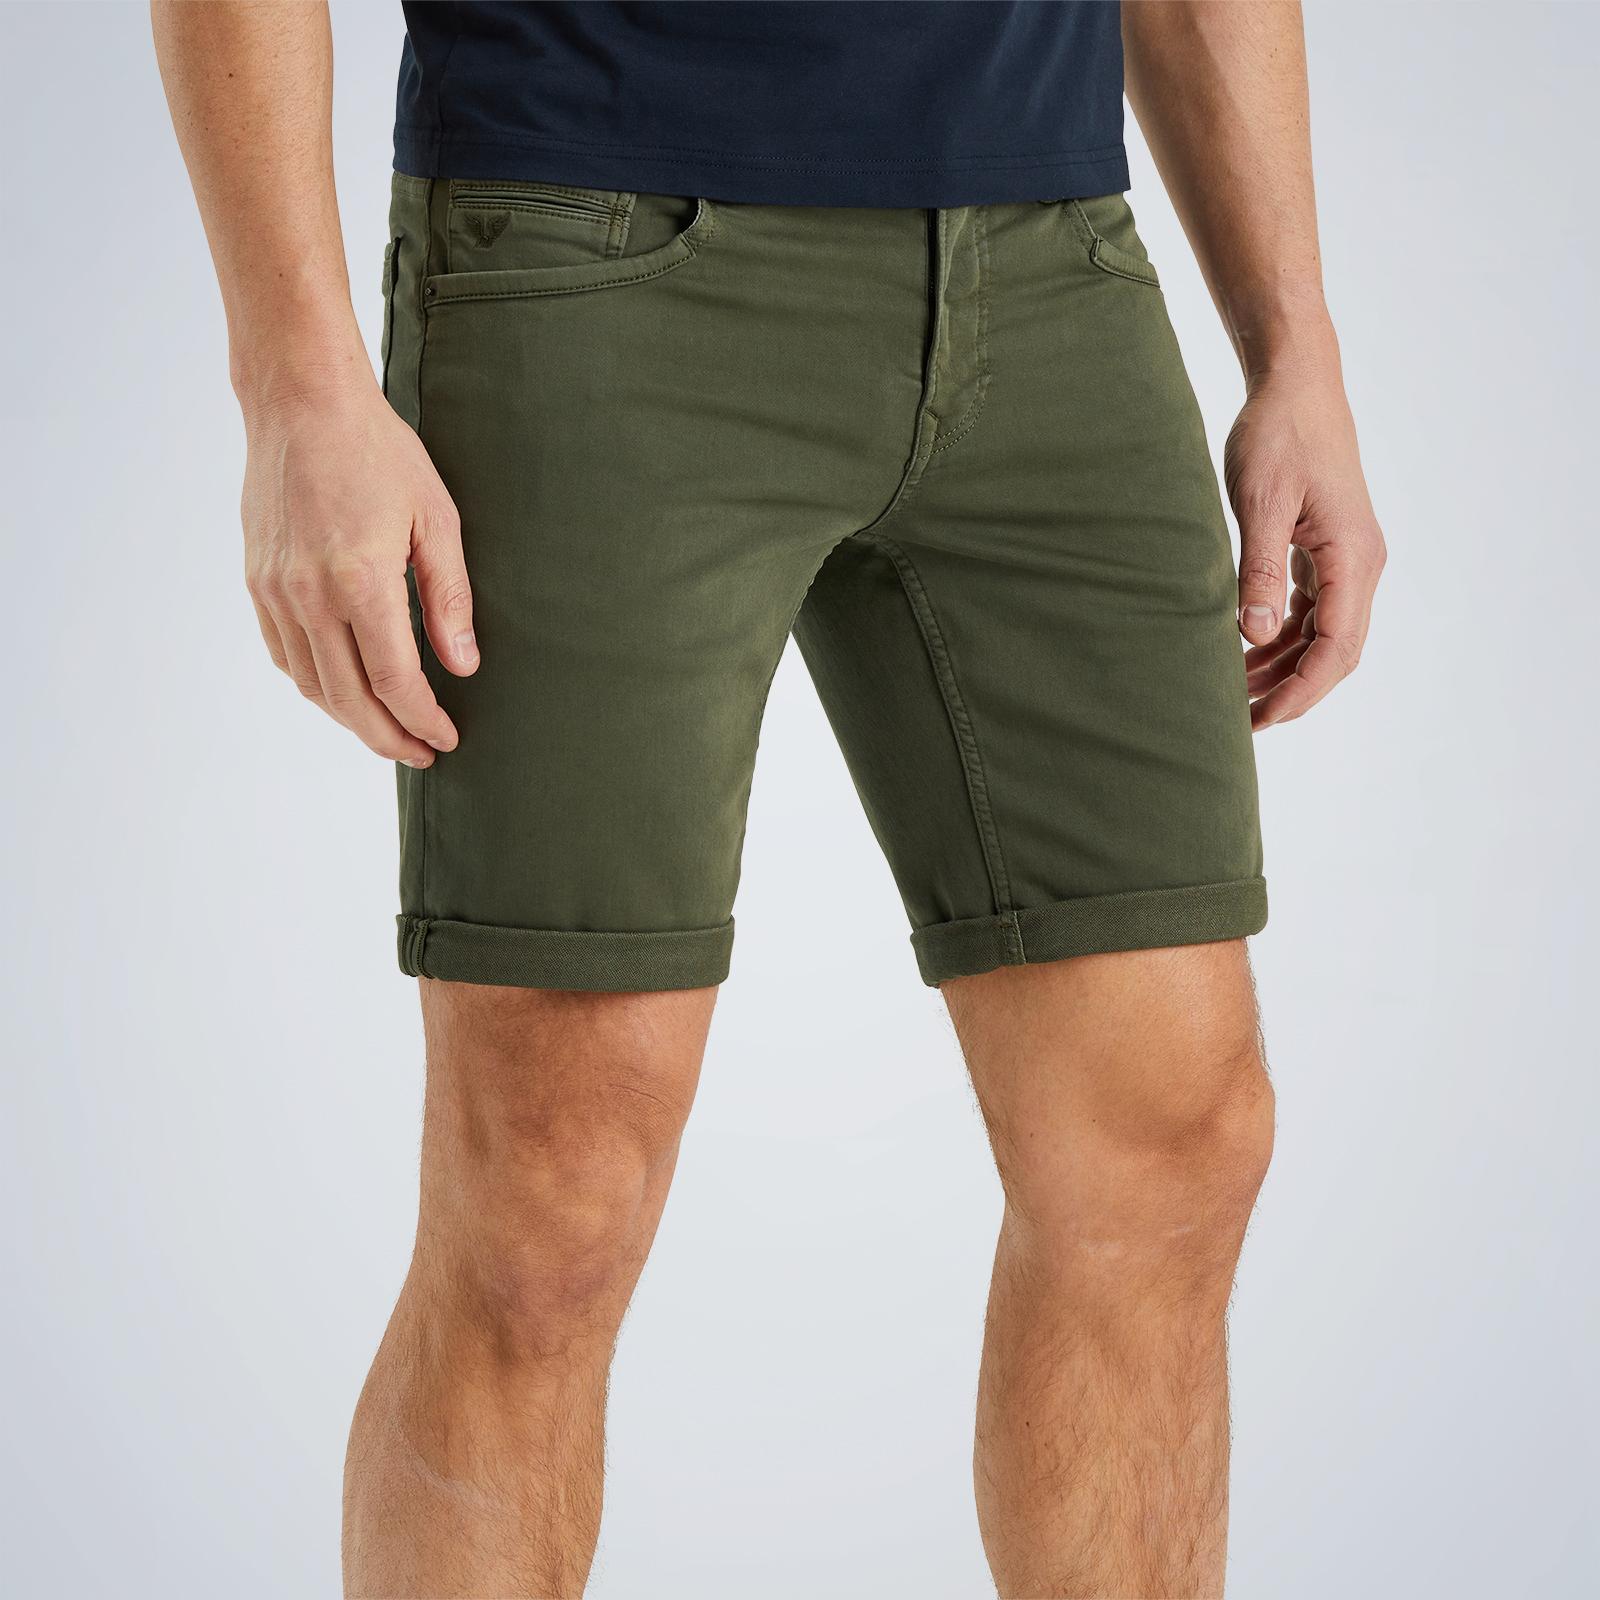 PME Legend Tailwheel shorts